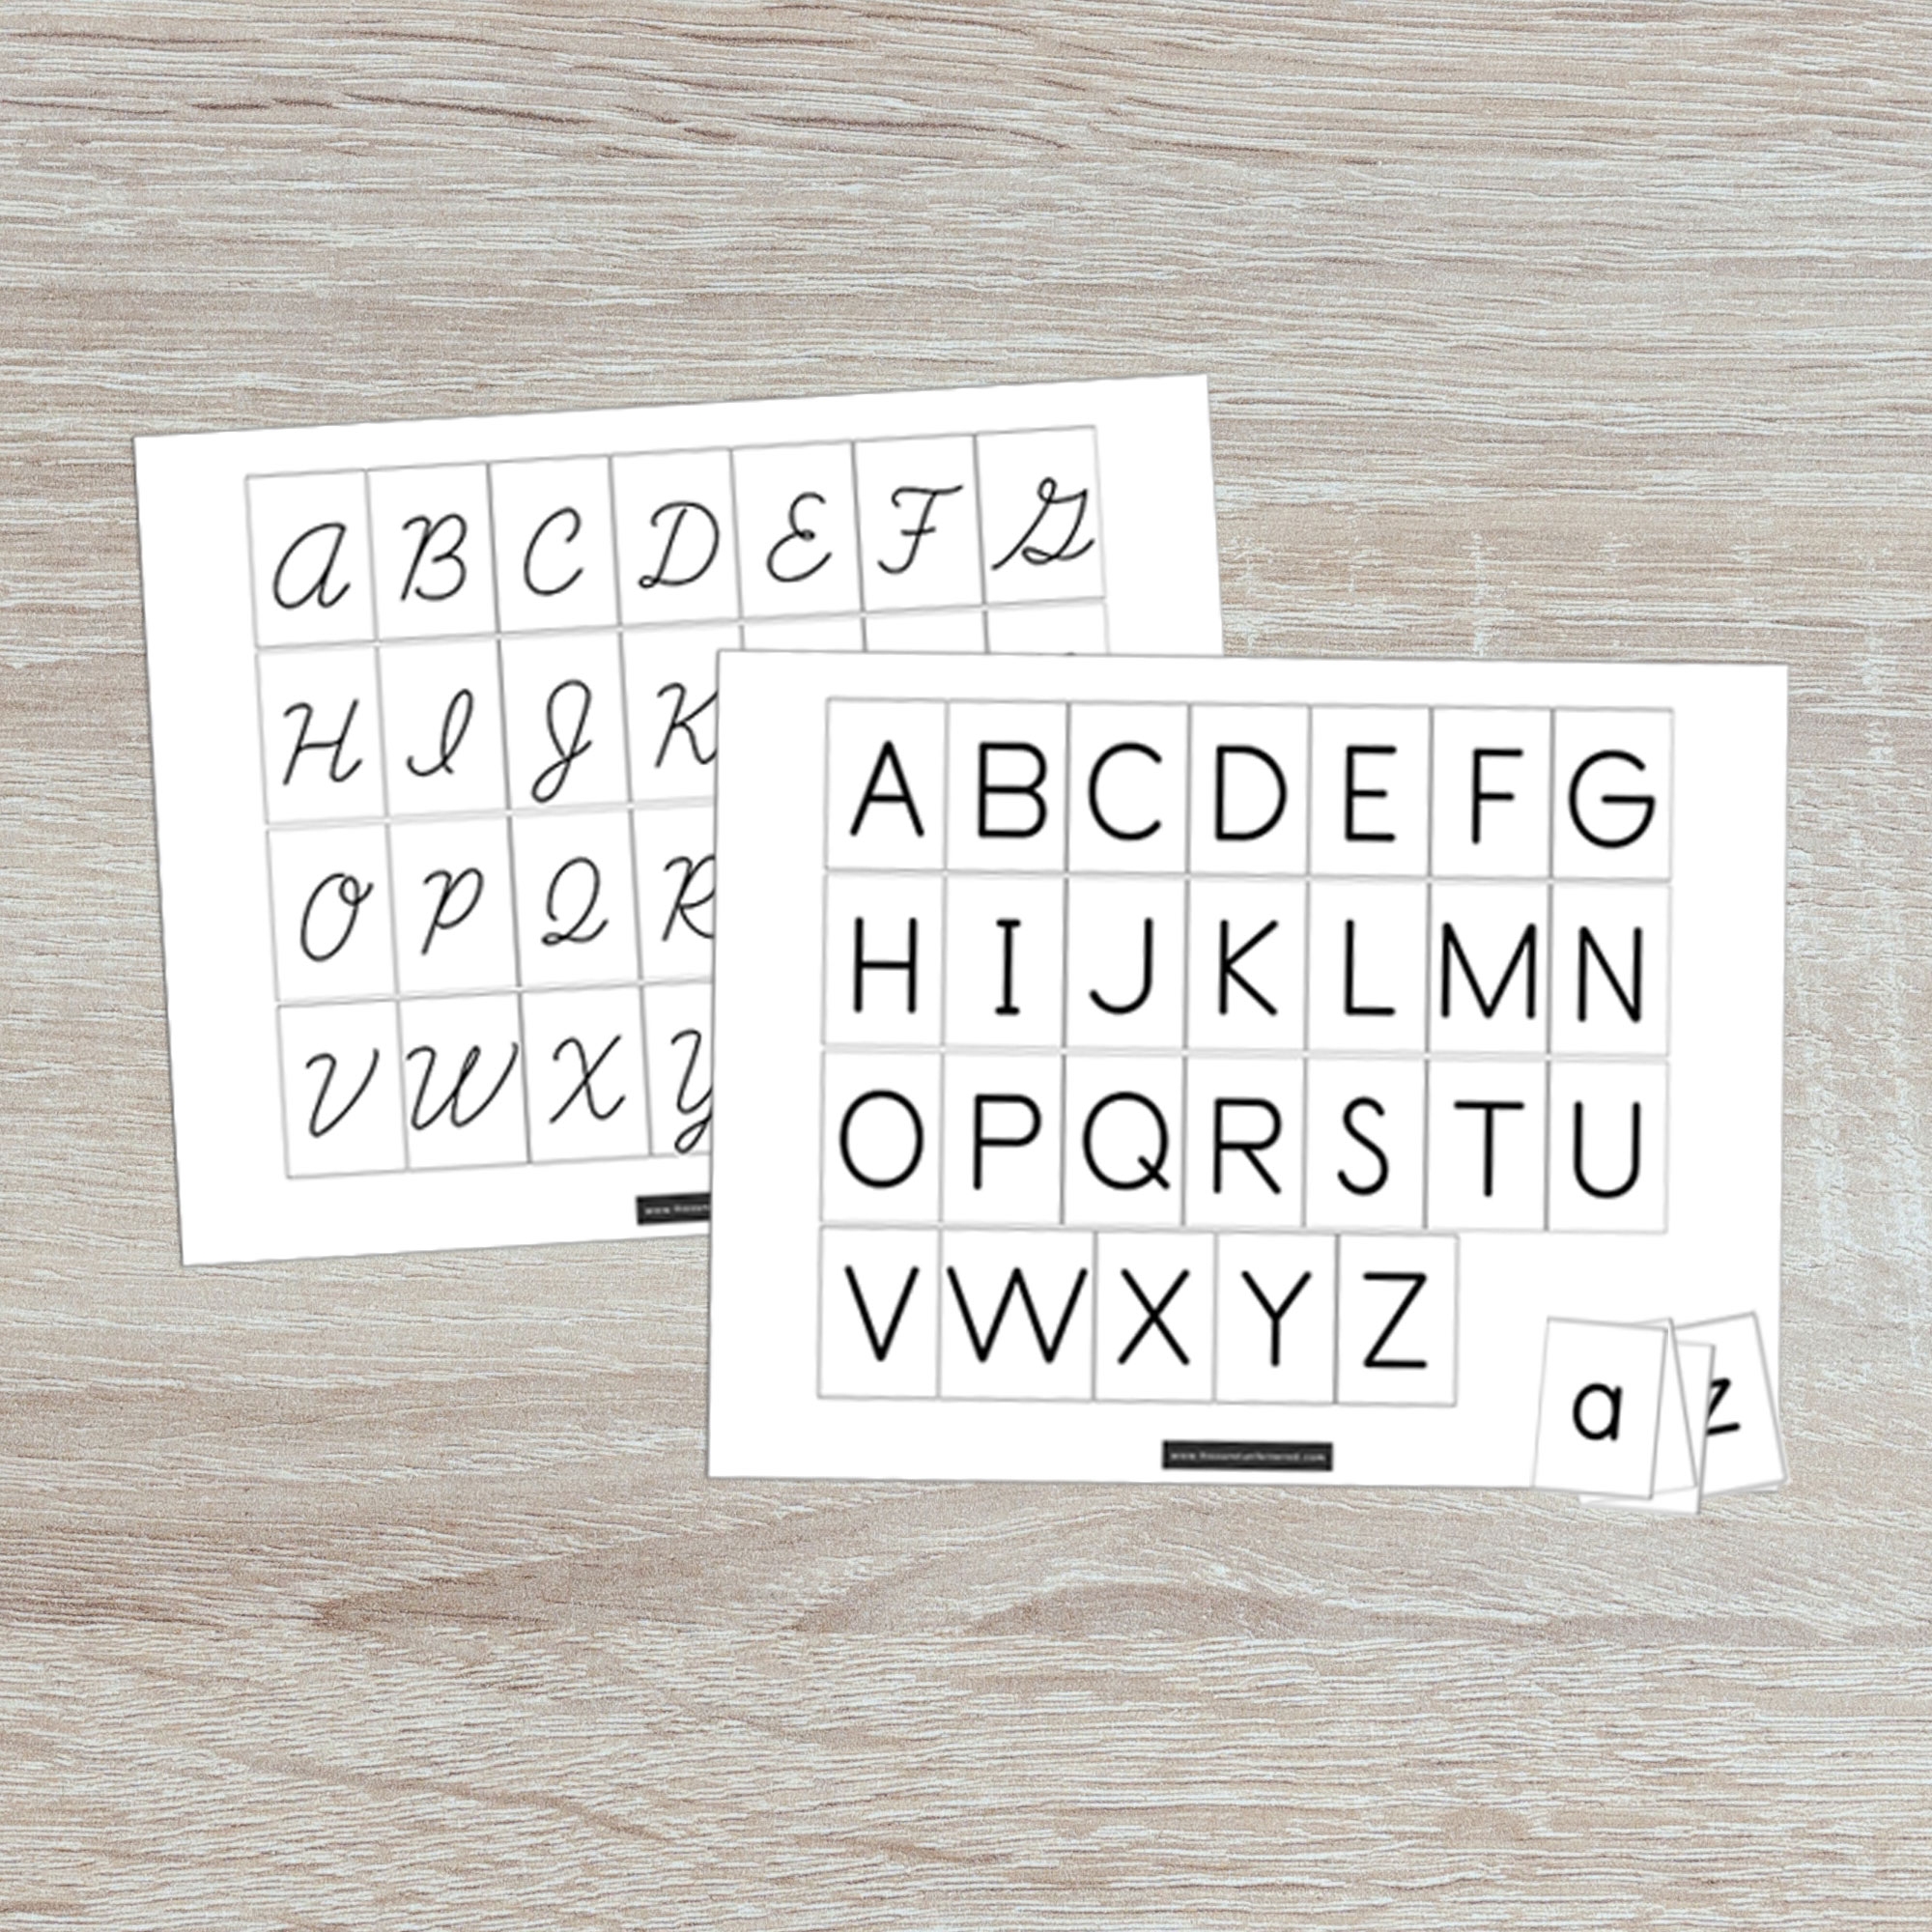 Alphabet Letter Tiles Printable